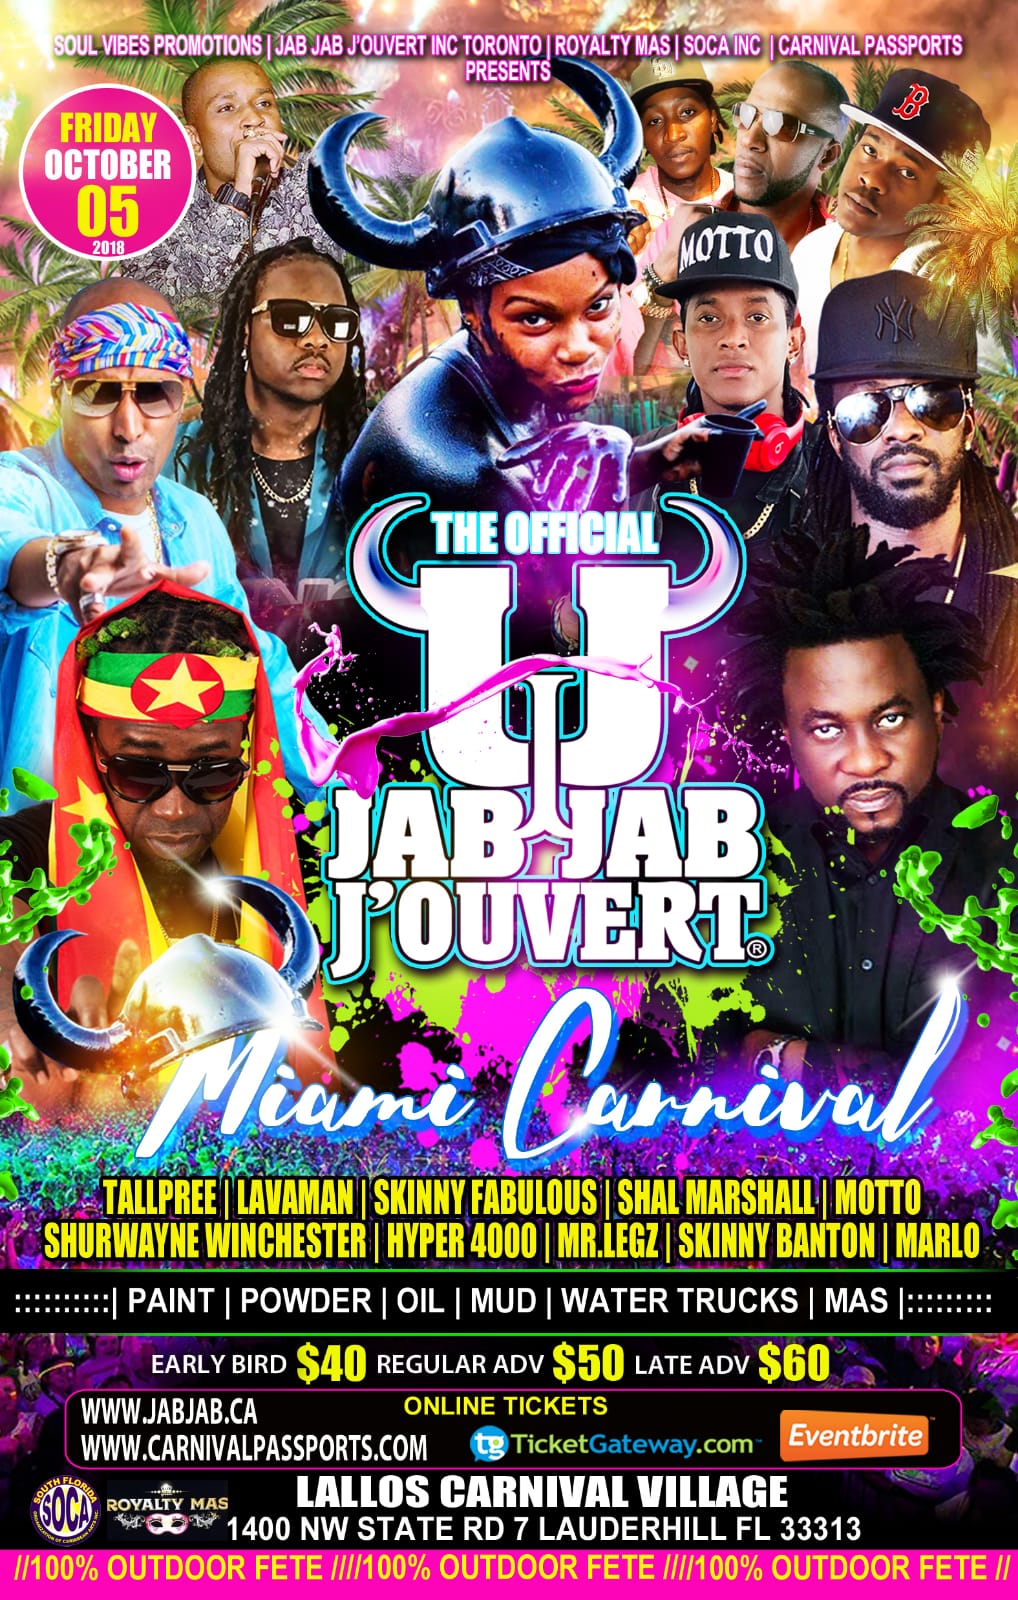 The Official Jab Jab J'ouvert \ Miami Carnival